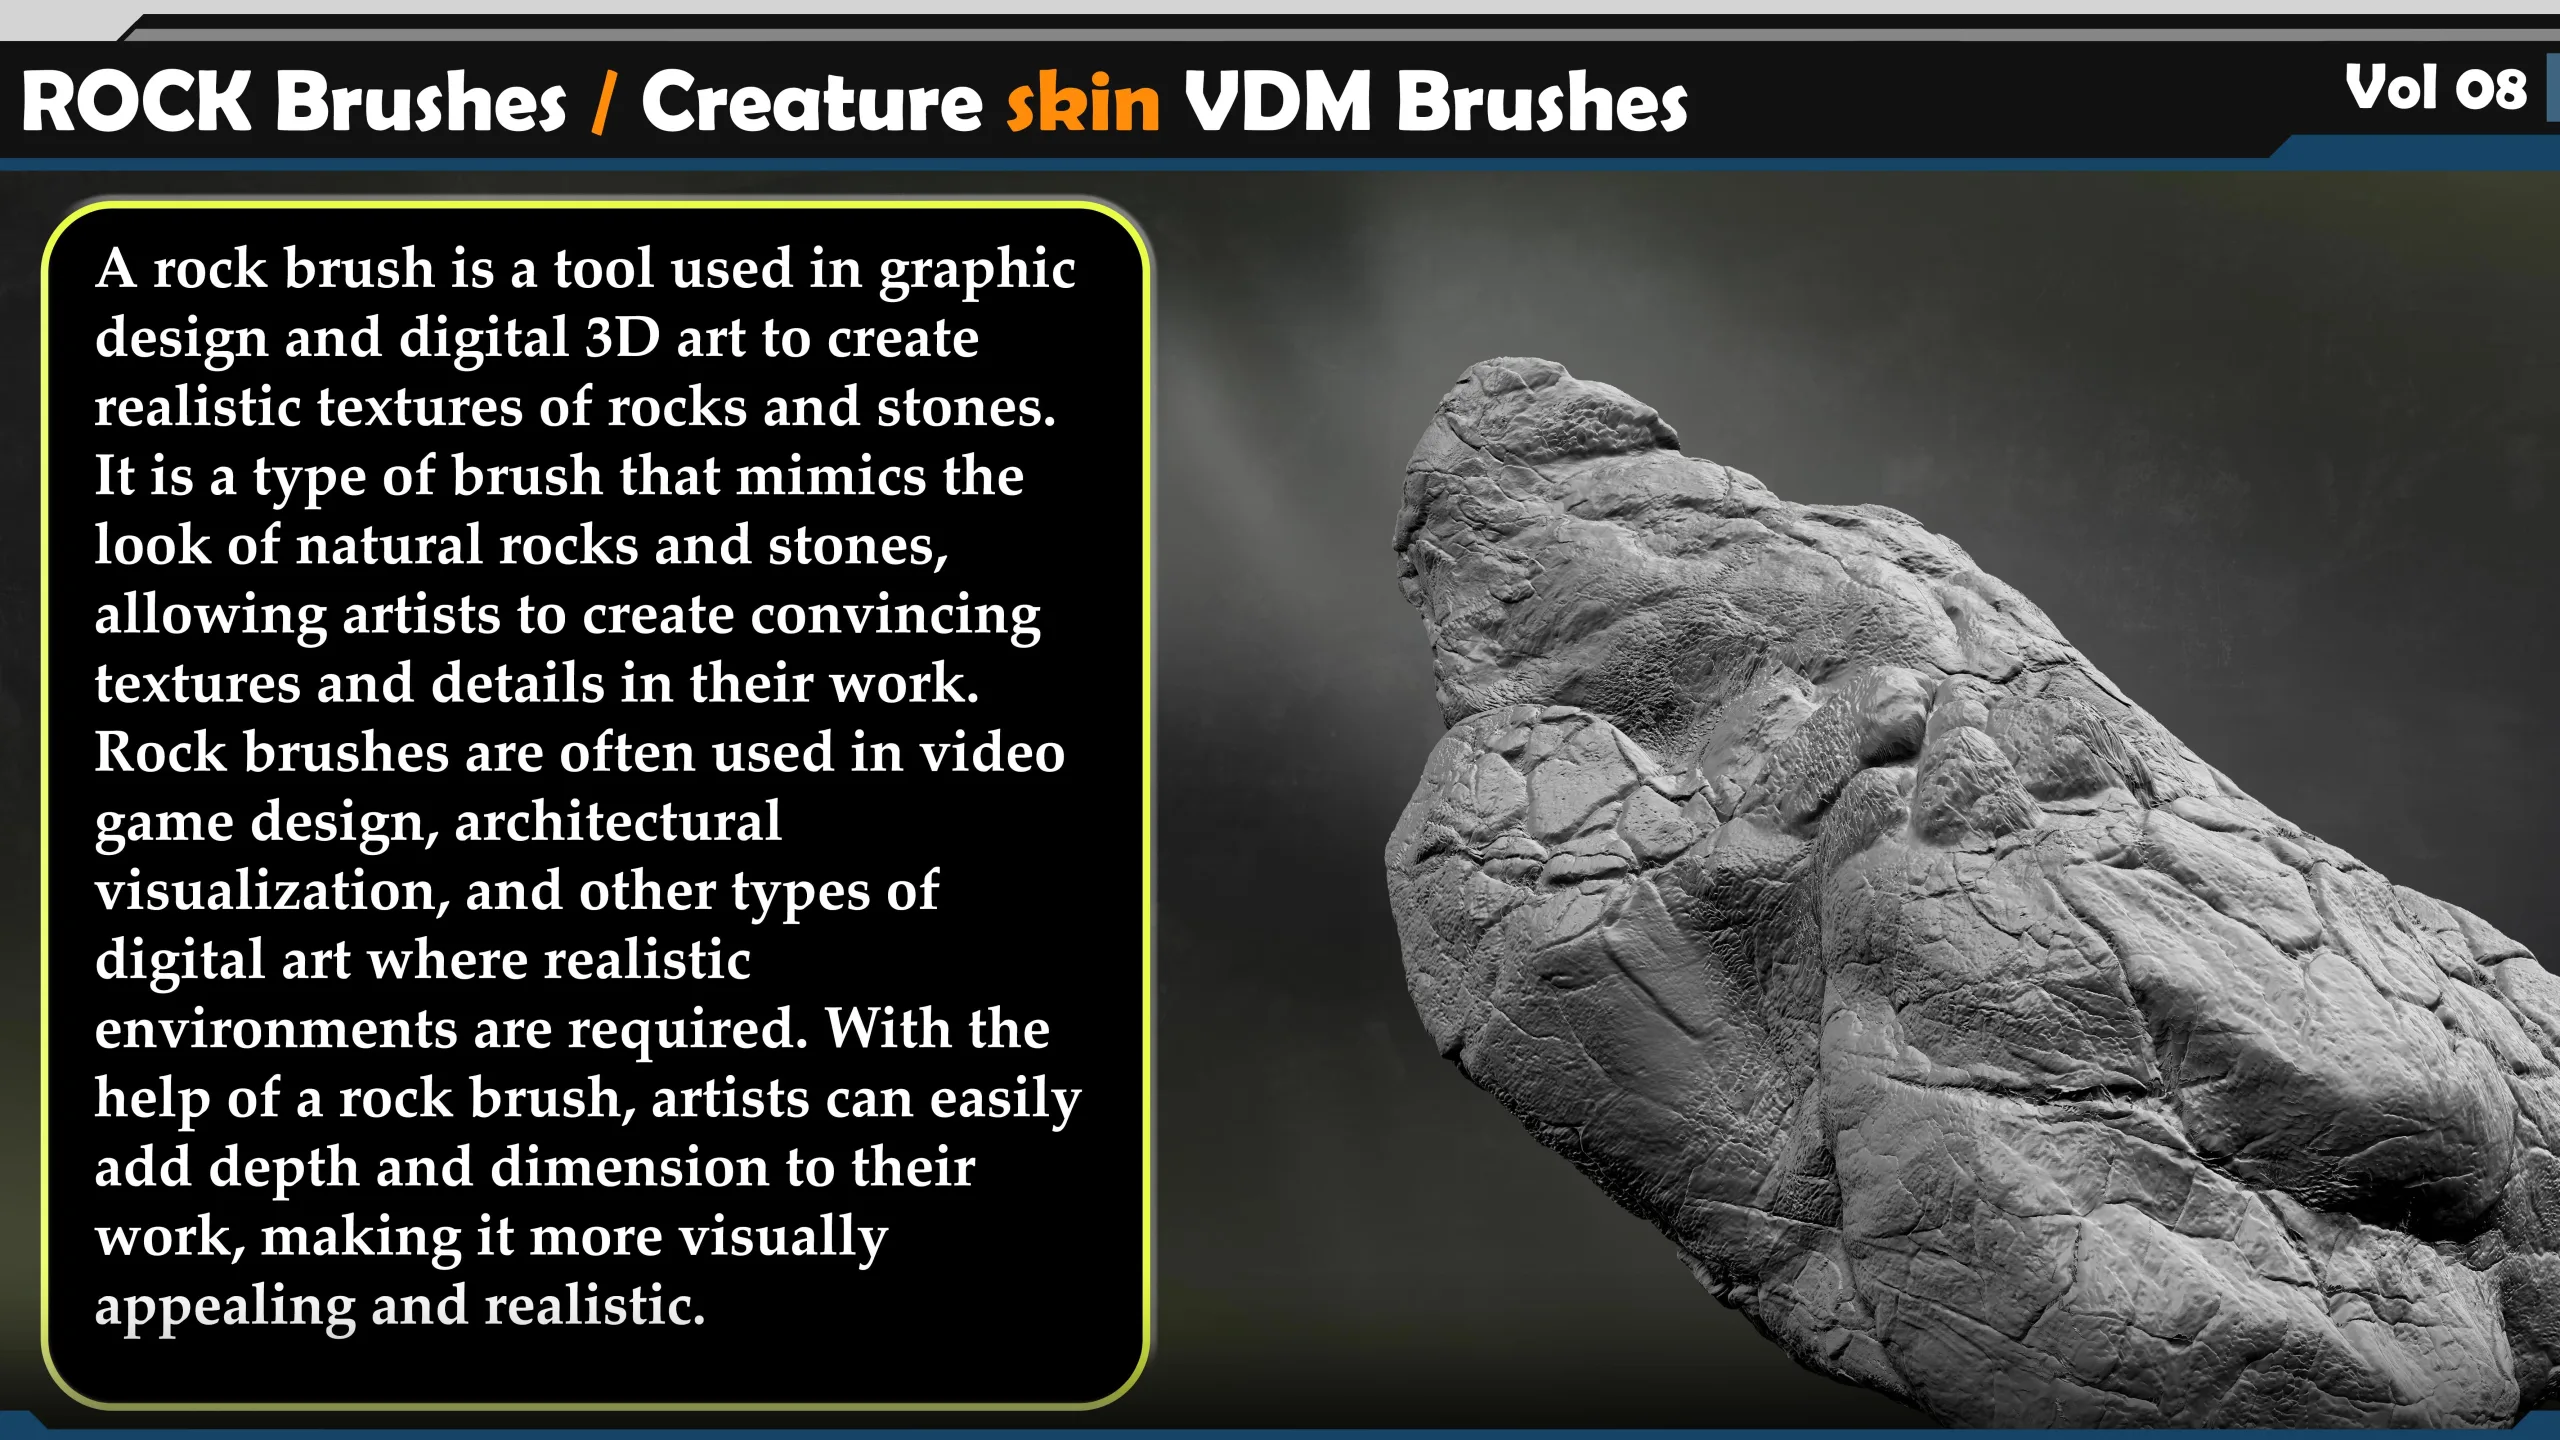 ROCK Brushes / Creature skin VDM Brushes  Vol 08